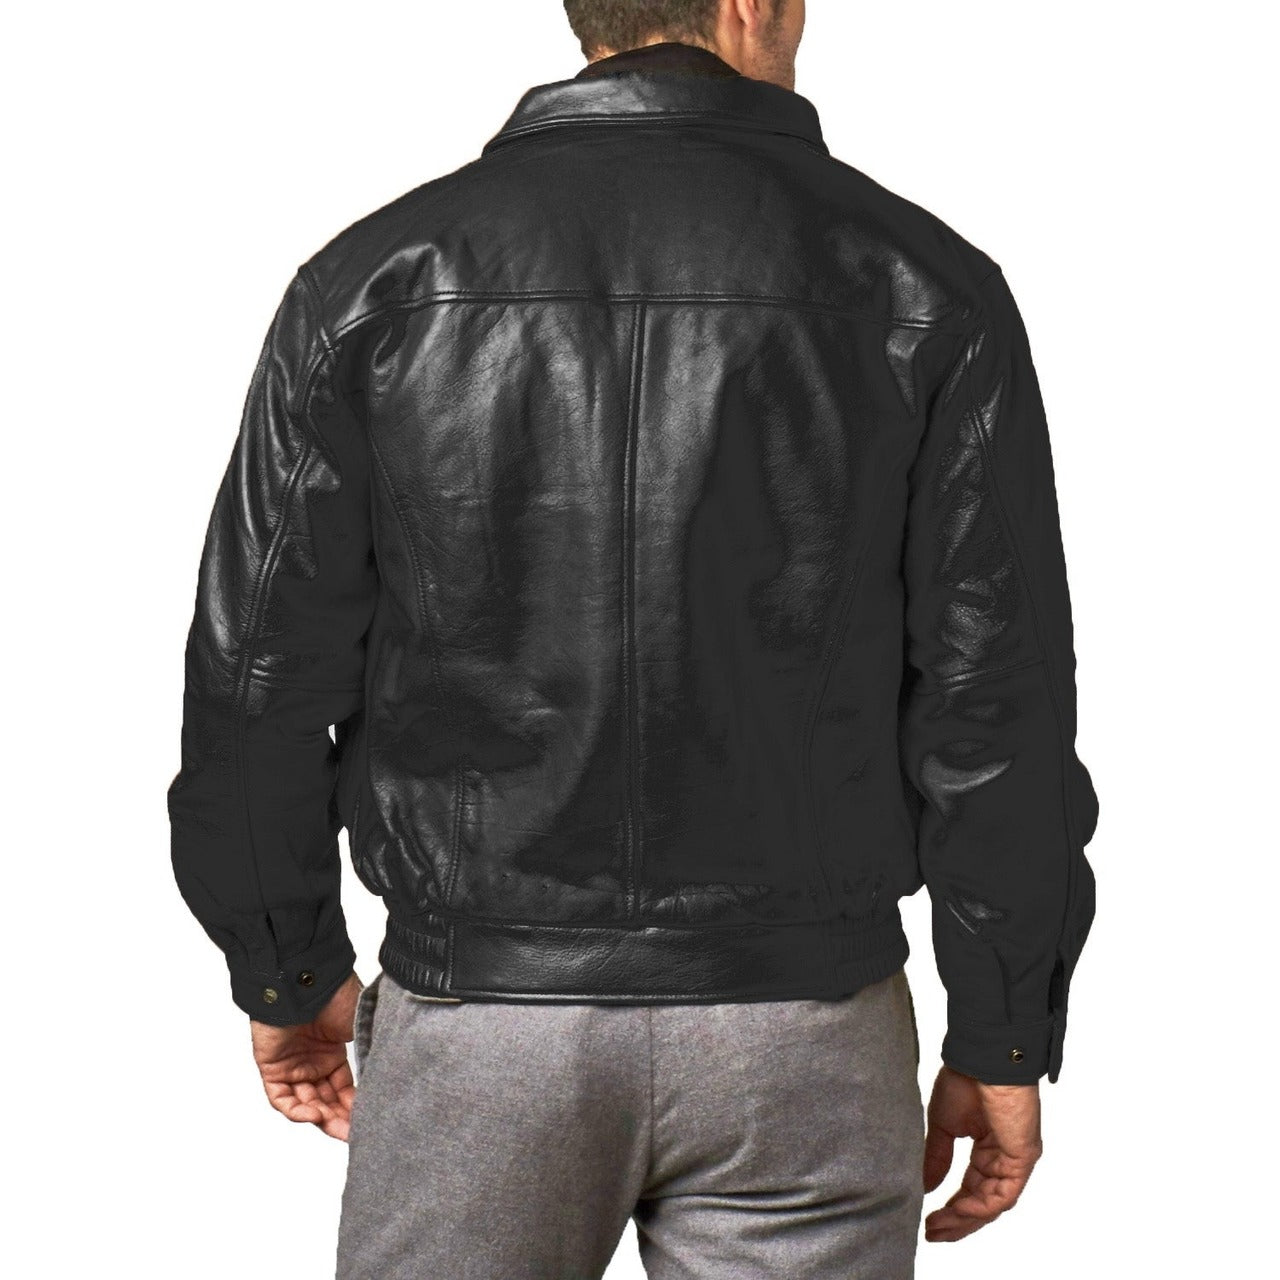 Classic Design Genuine Sheep Leather Jacket Black For Men